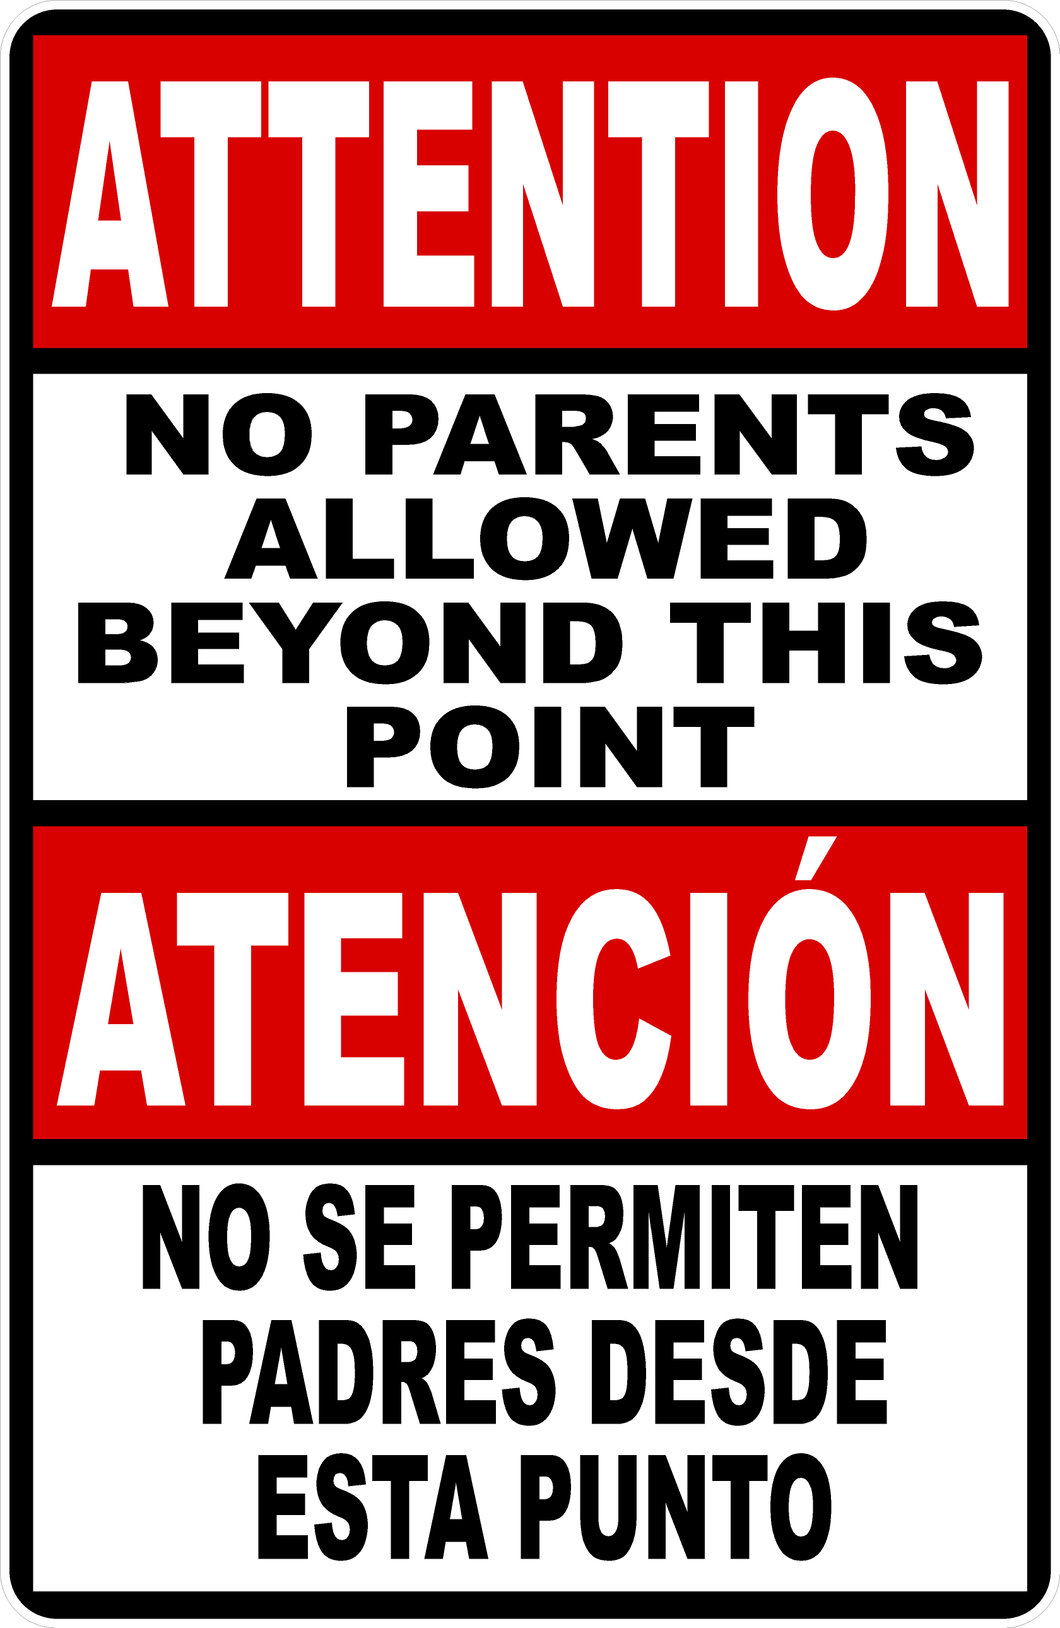 Attention No Parents Allowed Beyond This Point.  Atencion No Se Permiten Padres Desde Esta Punto Bilingual Sign